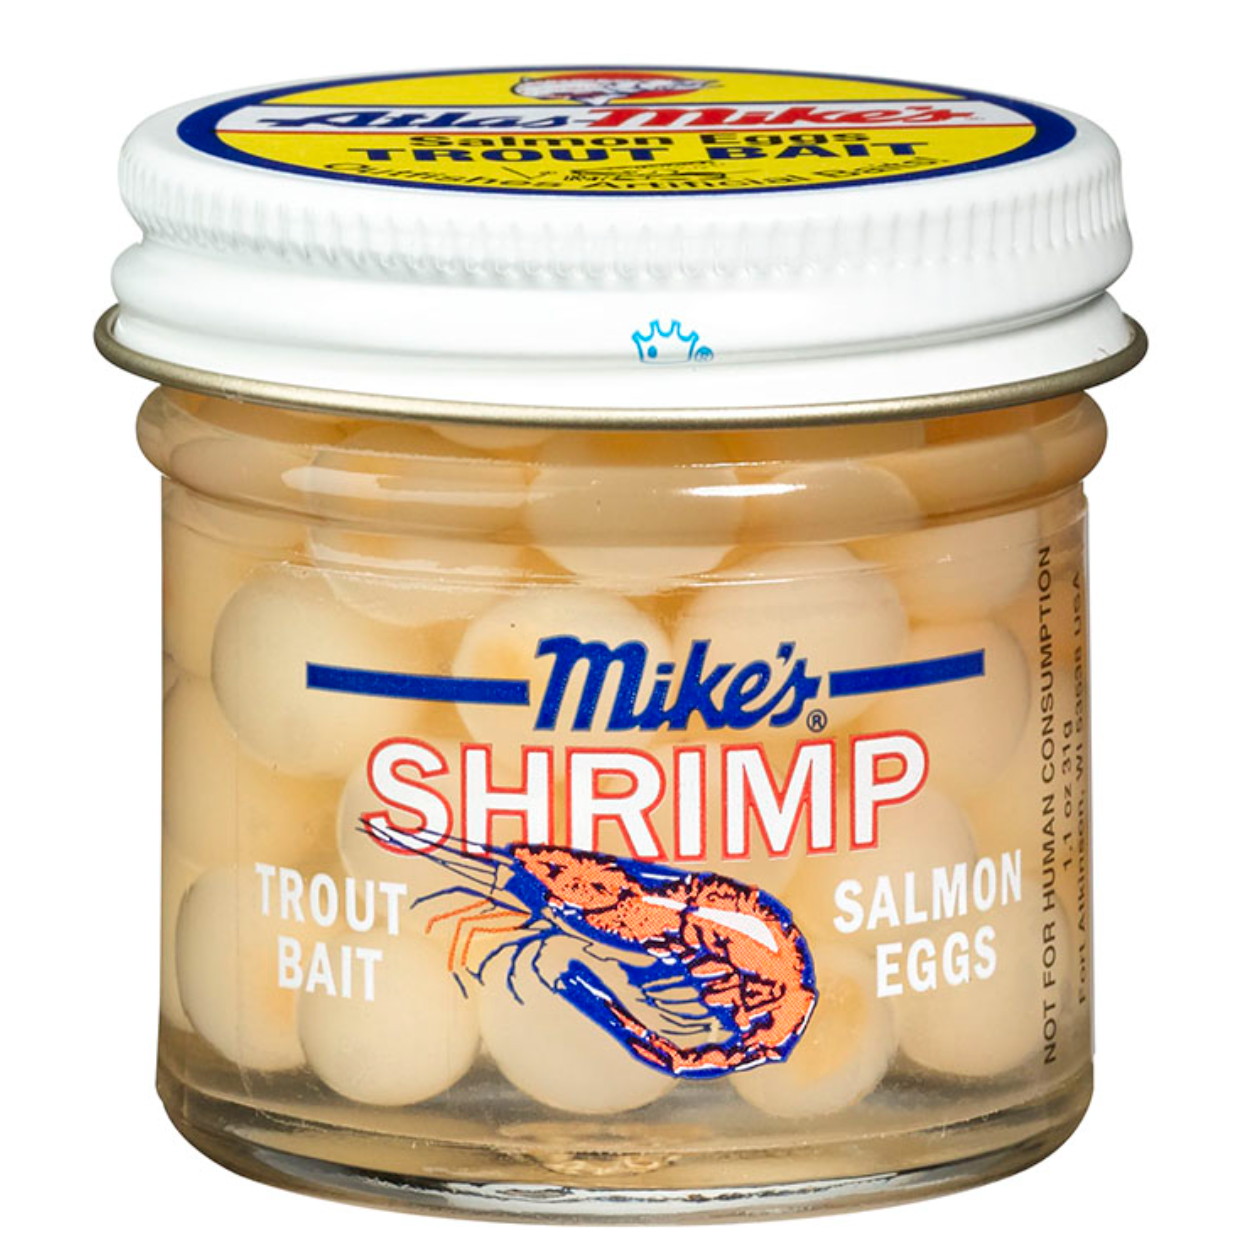 Mike's Shrimp Salmon Eggs White 1.1 oz Jar